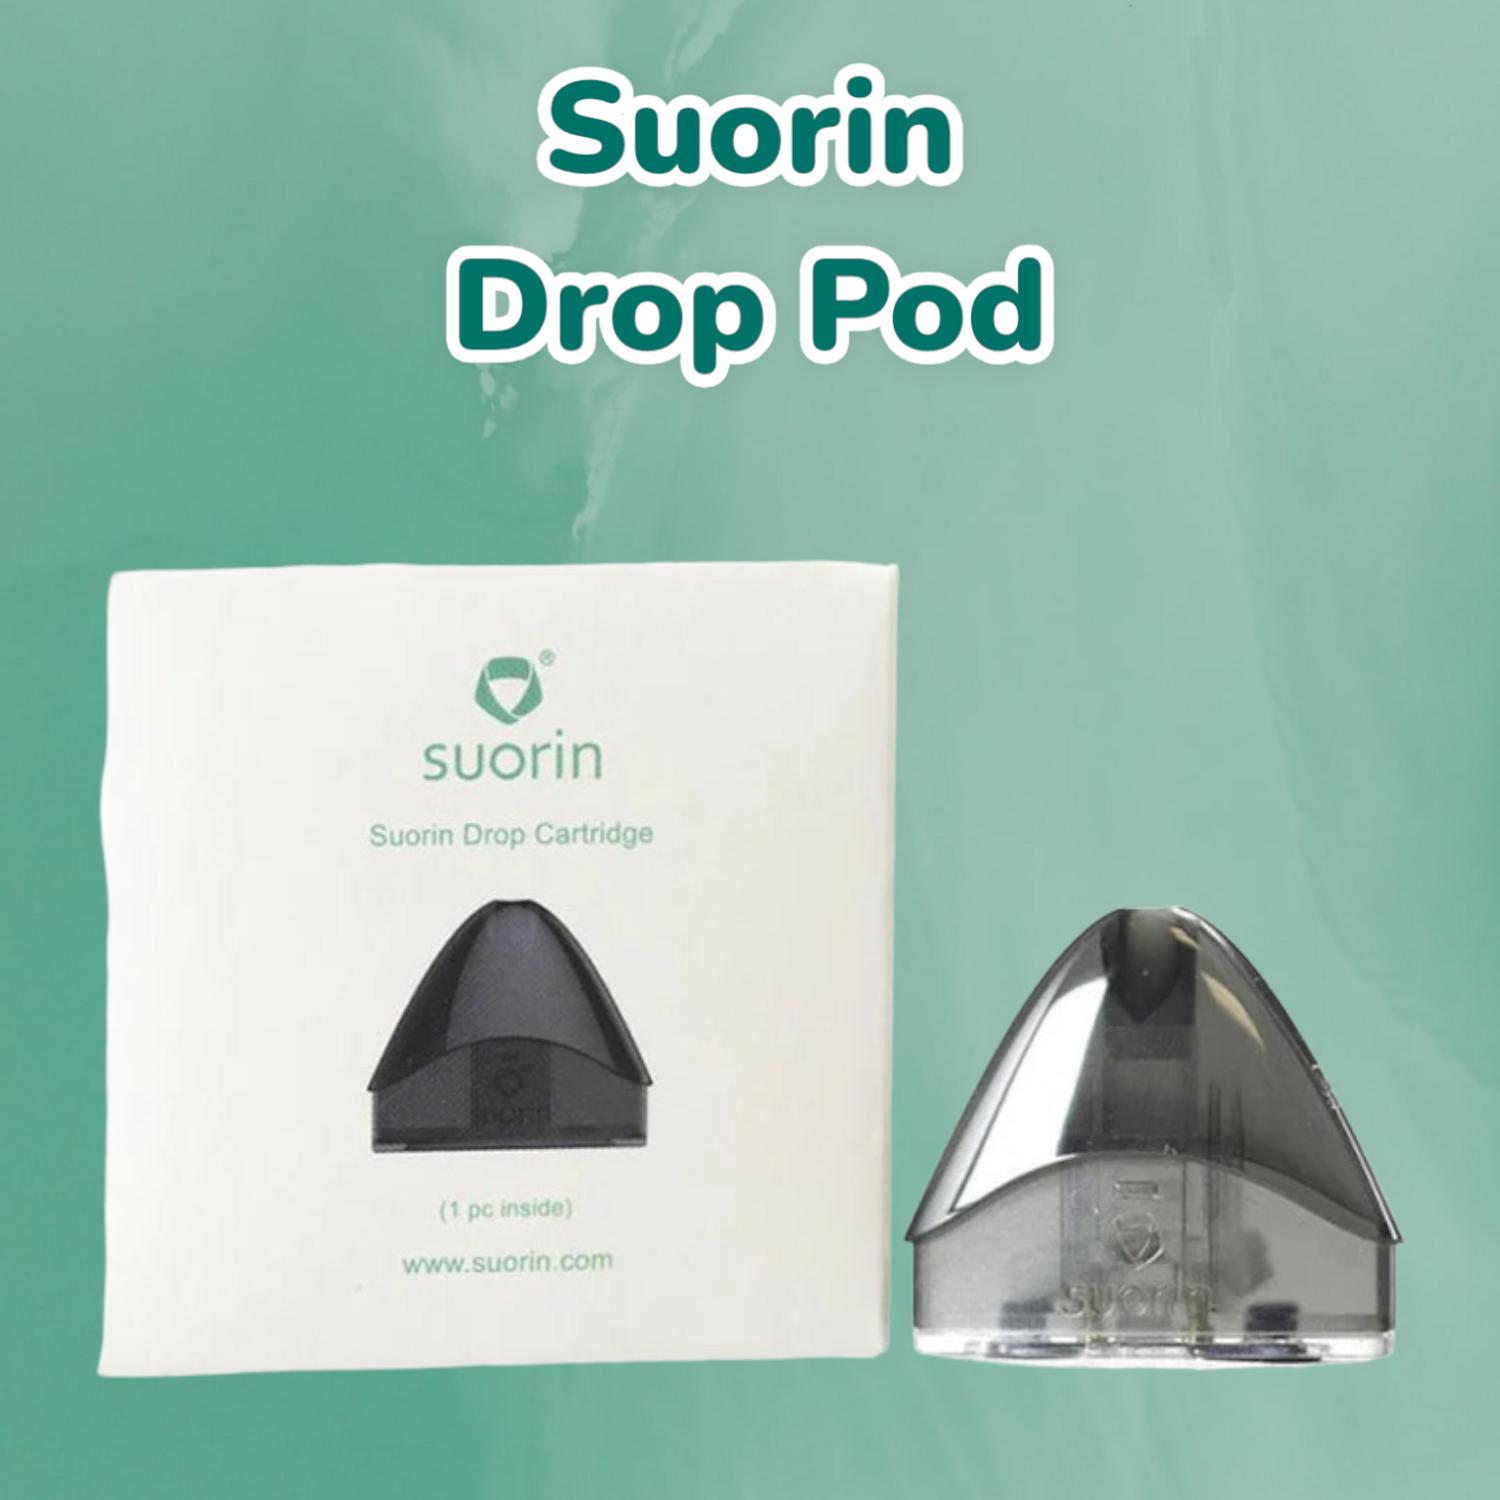 Suorin Drop Pod